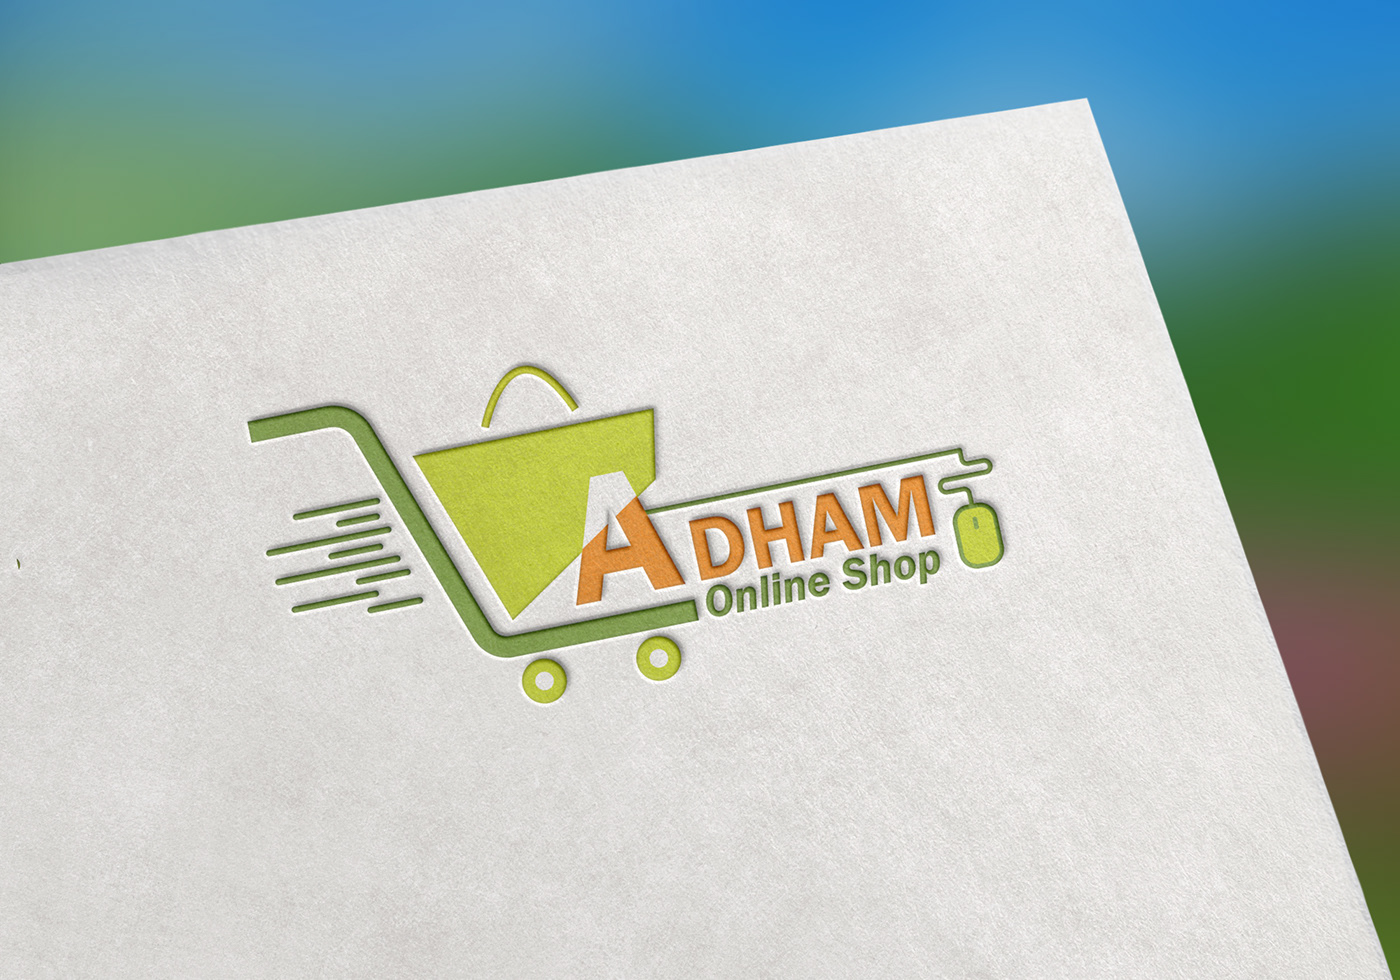 buy online e-shop e-shopping e-store Online shop paper bag shop Shopping Supermarket